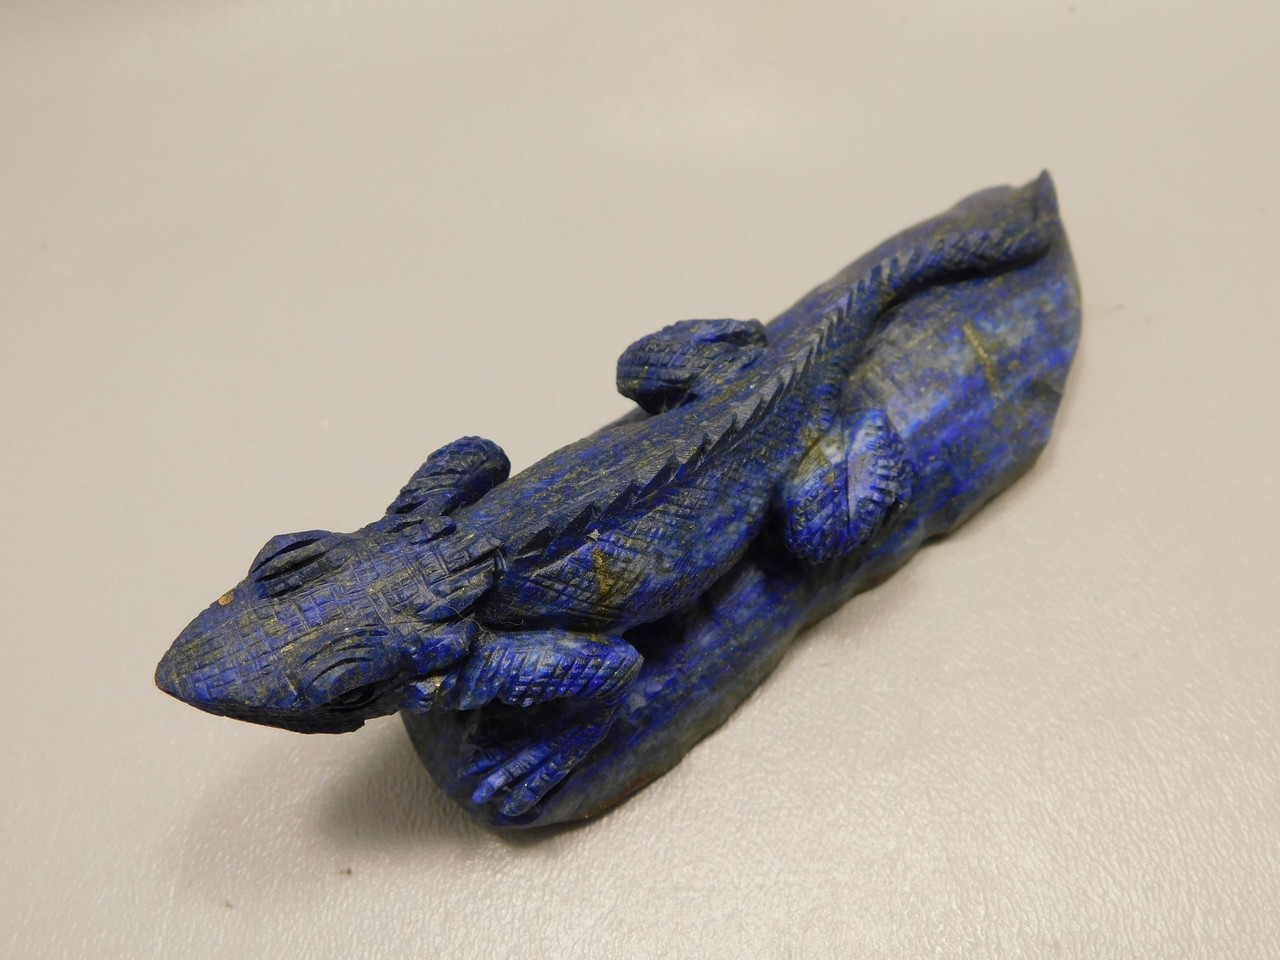 Lizard Figurine Blue Lapis Collectible Gemstone Animal Carving #O279